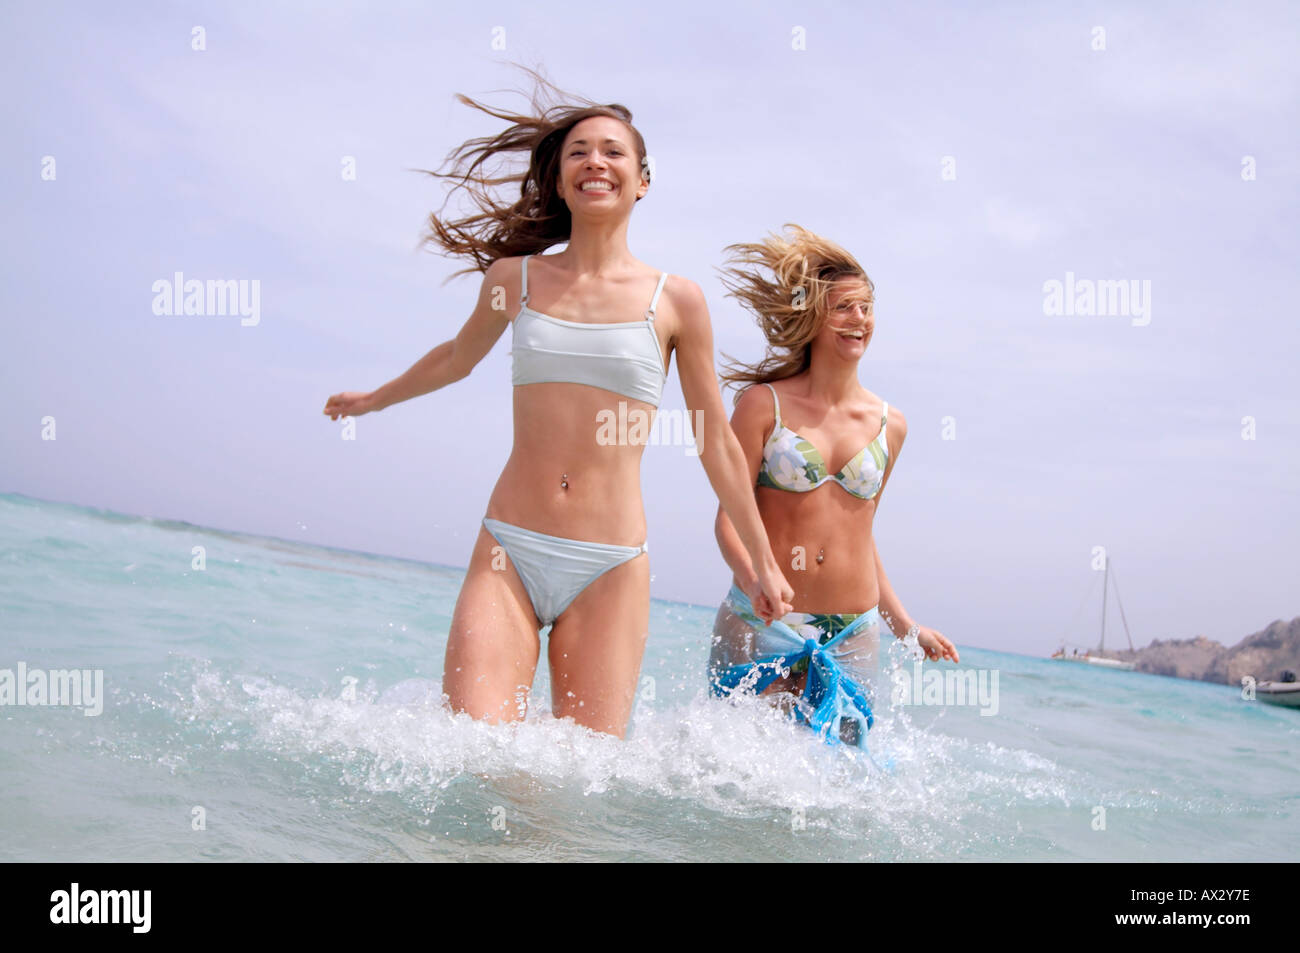 beach pureness beauty female women girls lifestyle people expressive leisure 20s ocean sea Stock Photo